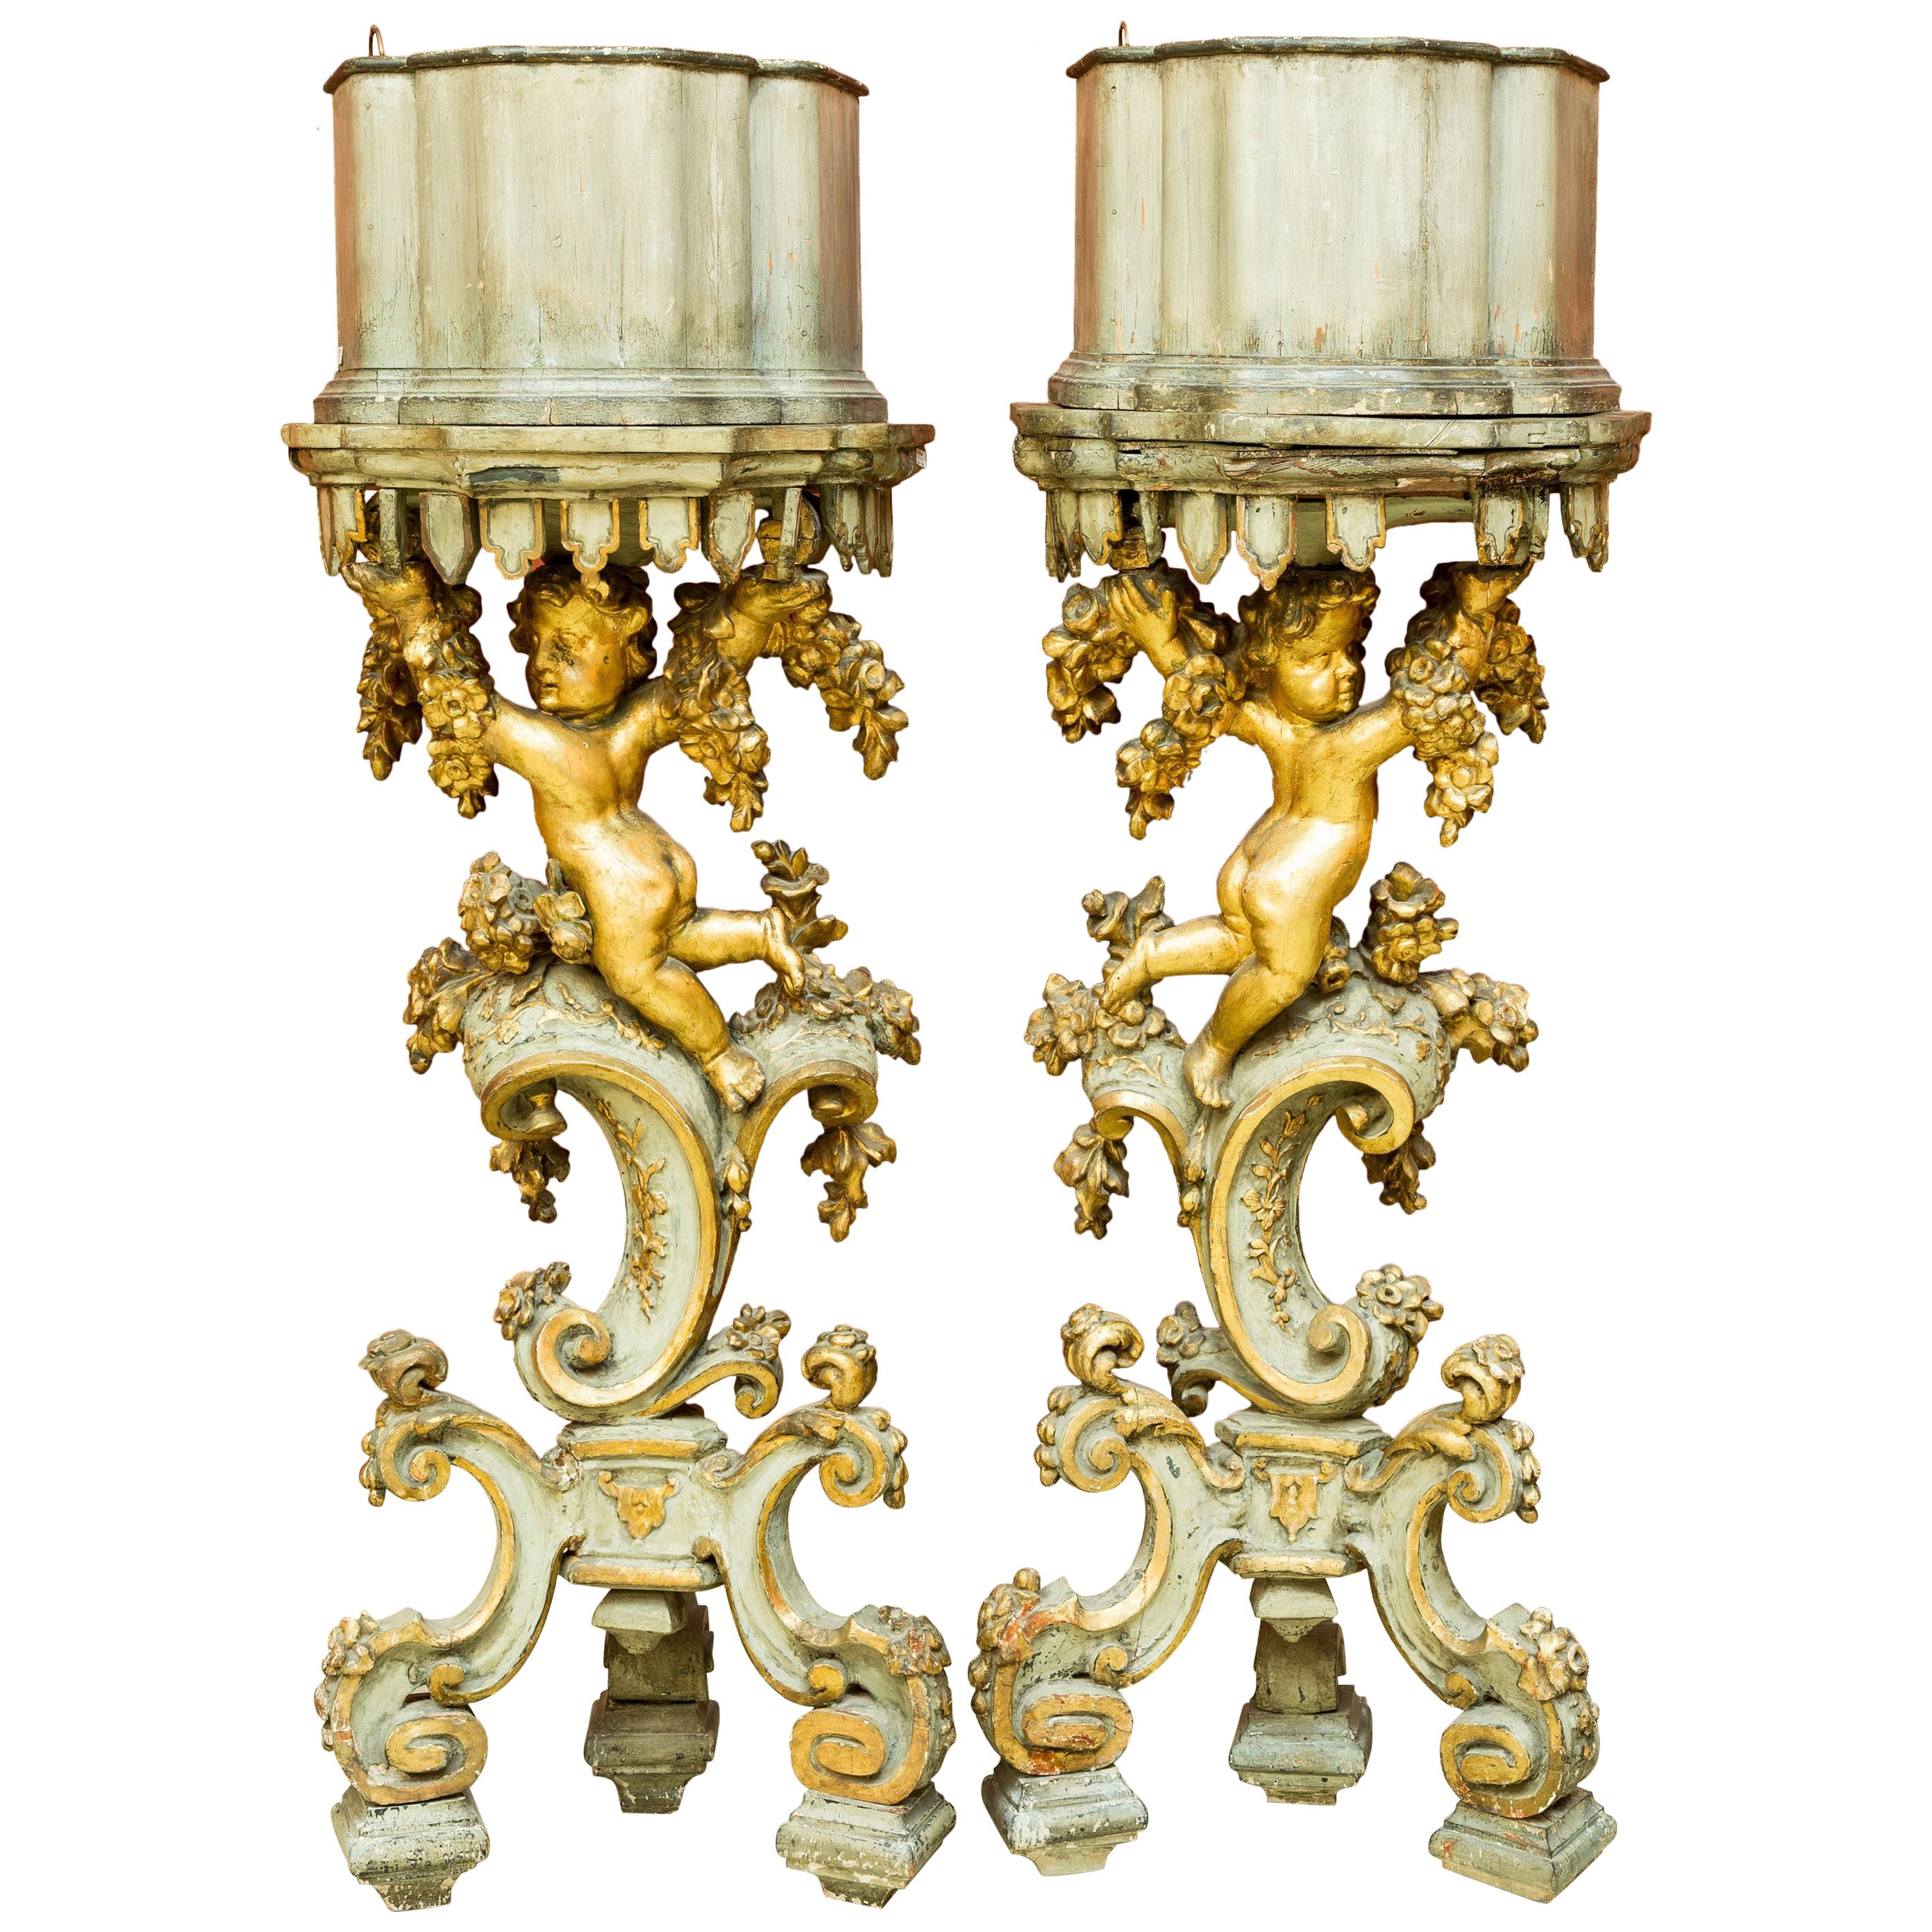 Pair of Italian Baroque Style Planter Pedestals, 19th Century